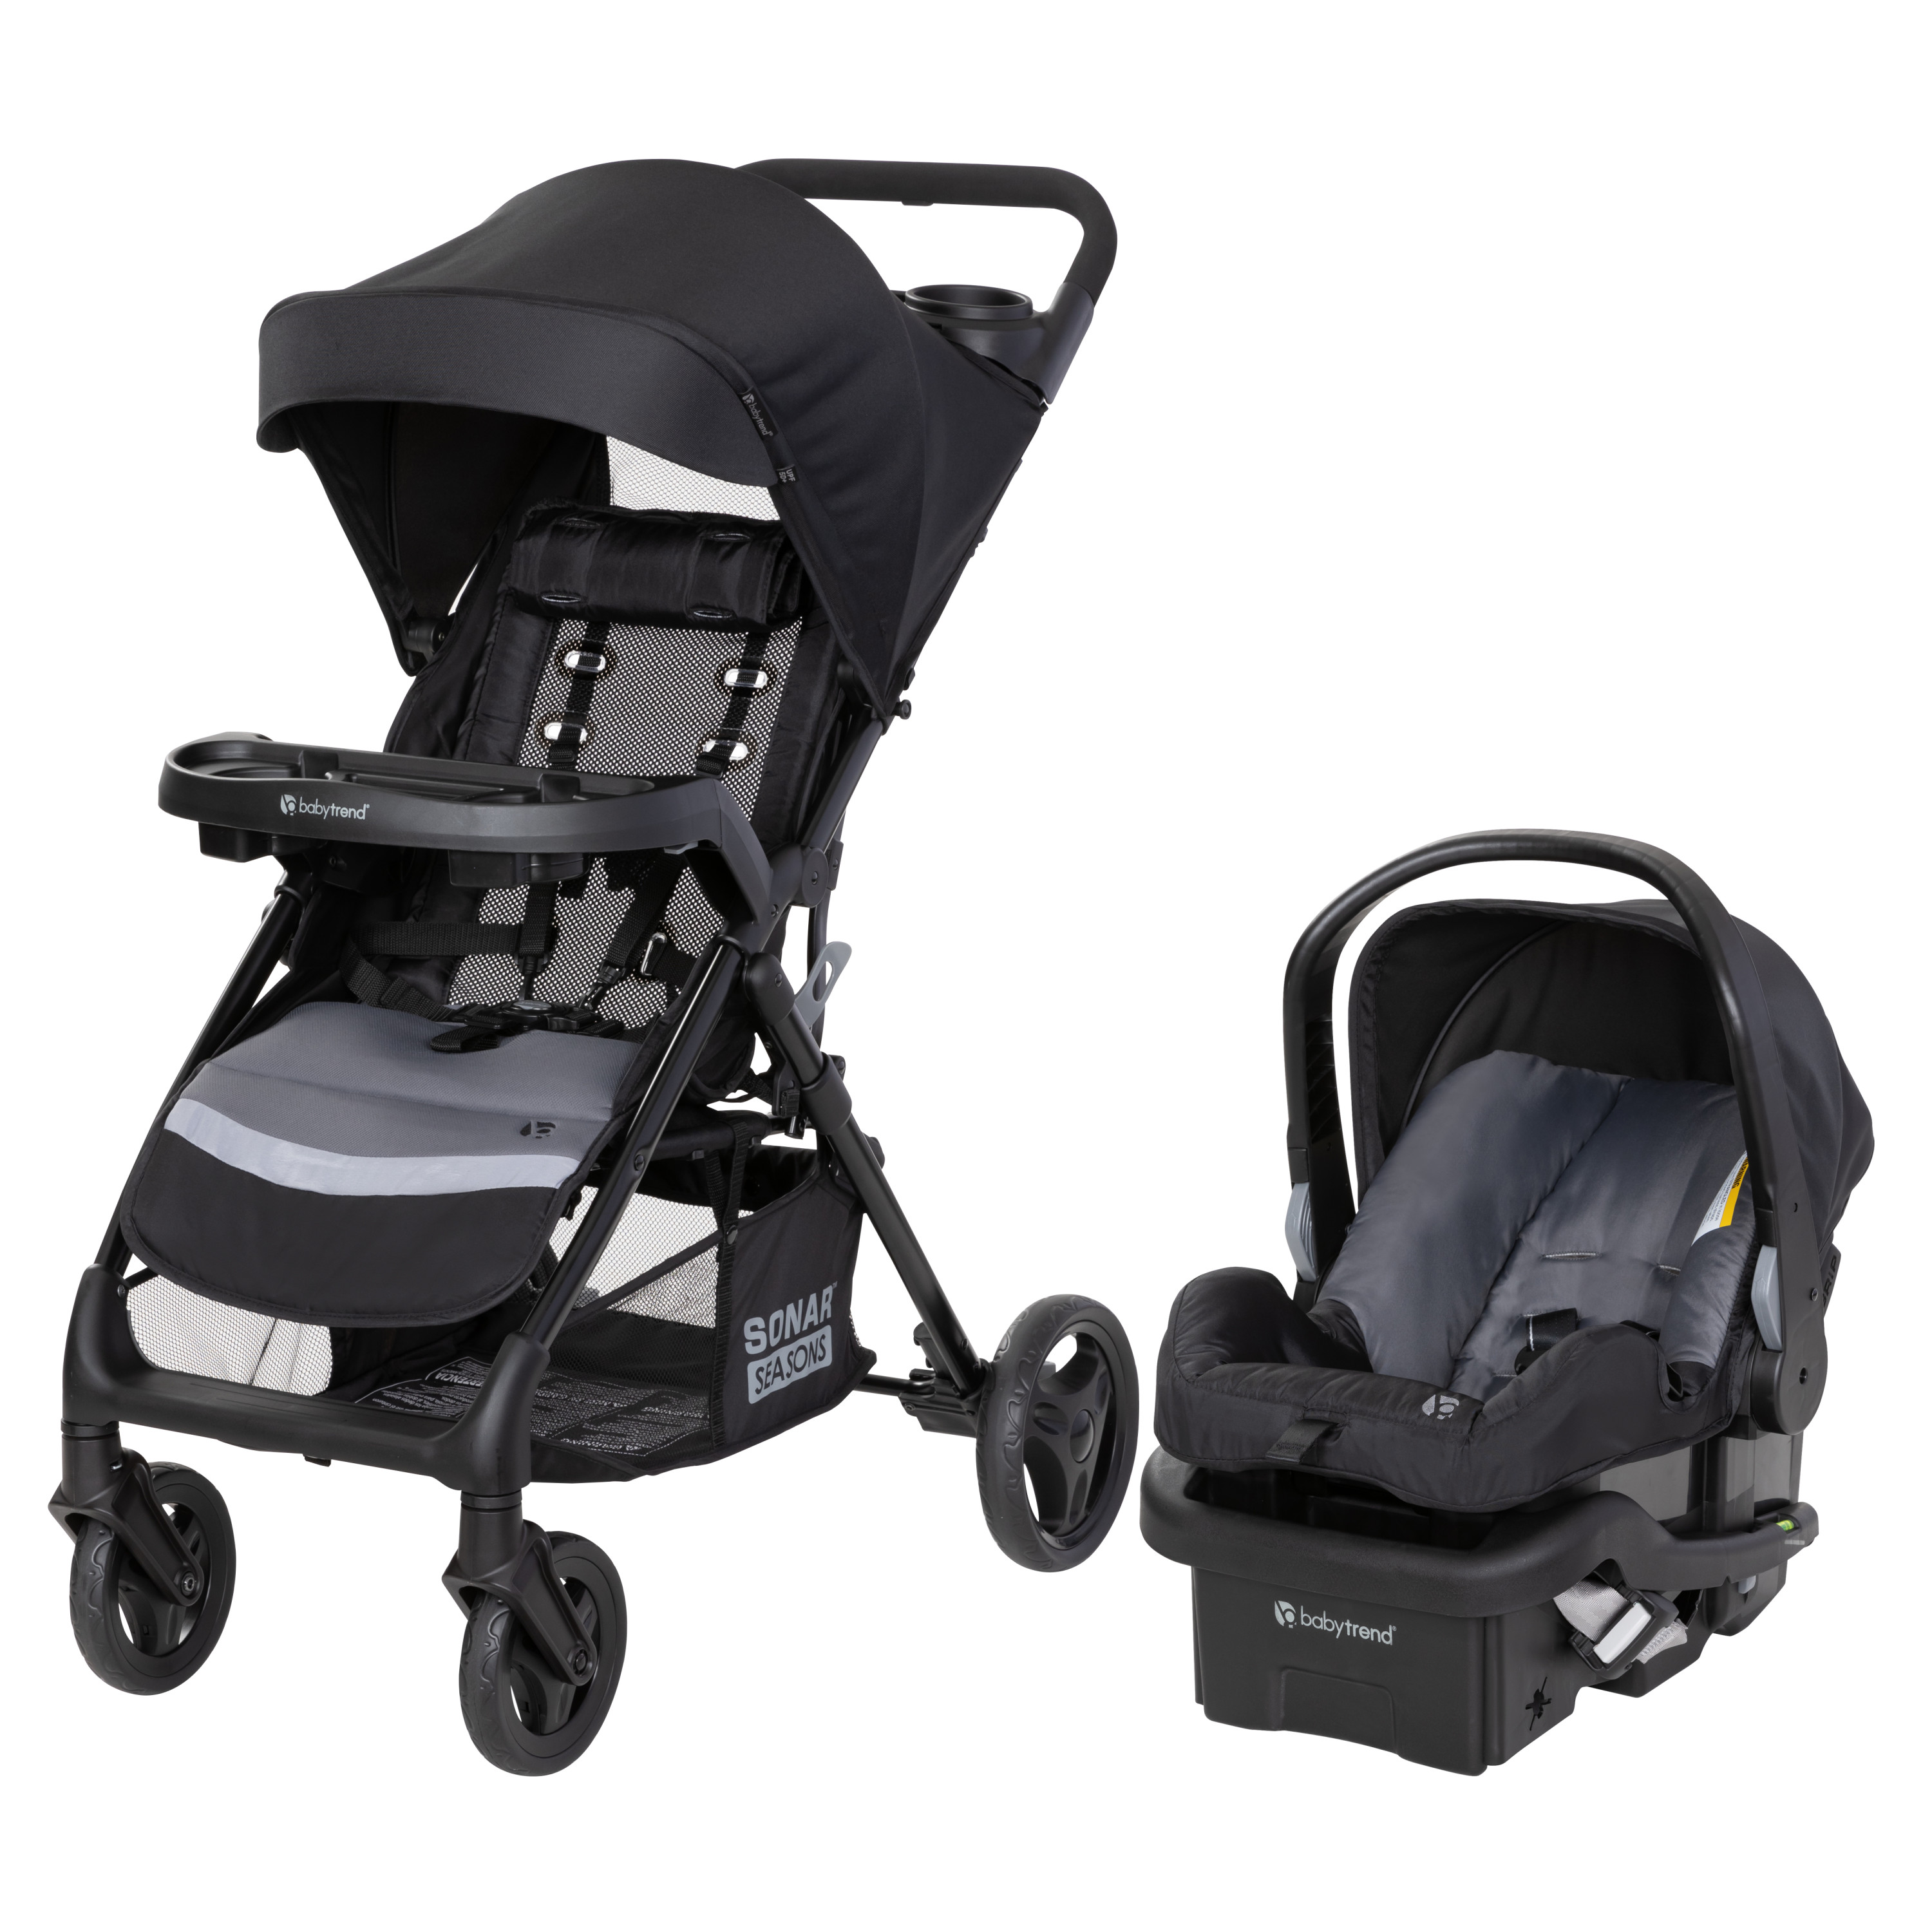 Baby Trend Sonar Seasons Travel System with EZ-Lift™ 35 Infant Car Seat - Journey Black - Black - image 4 of 20